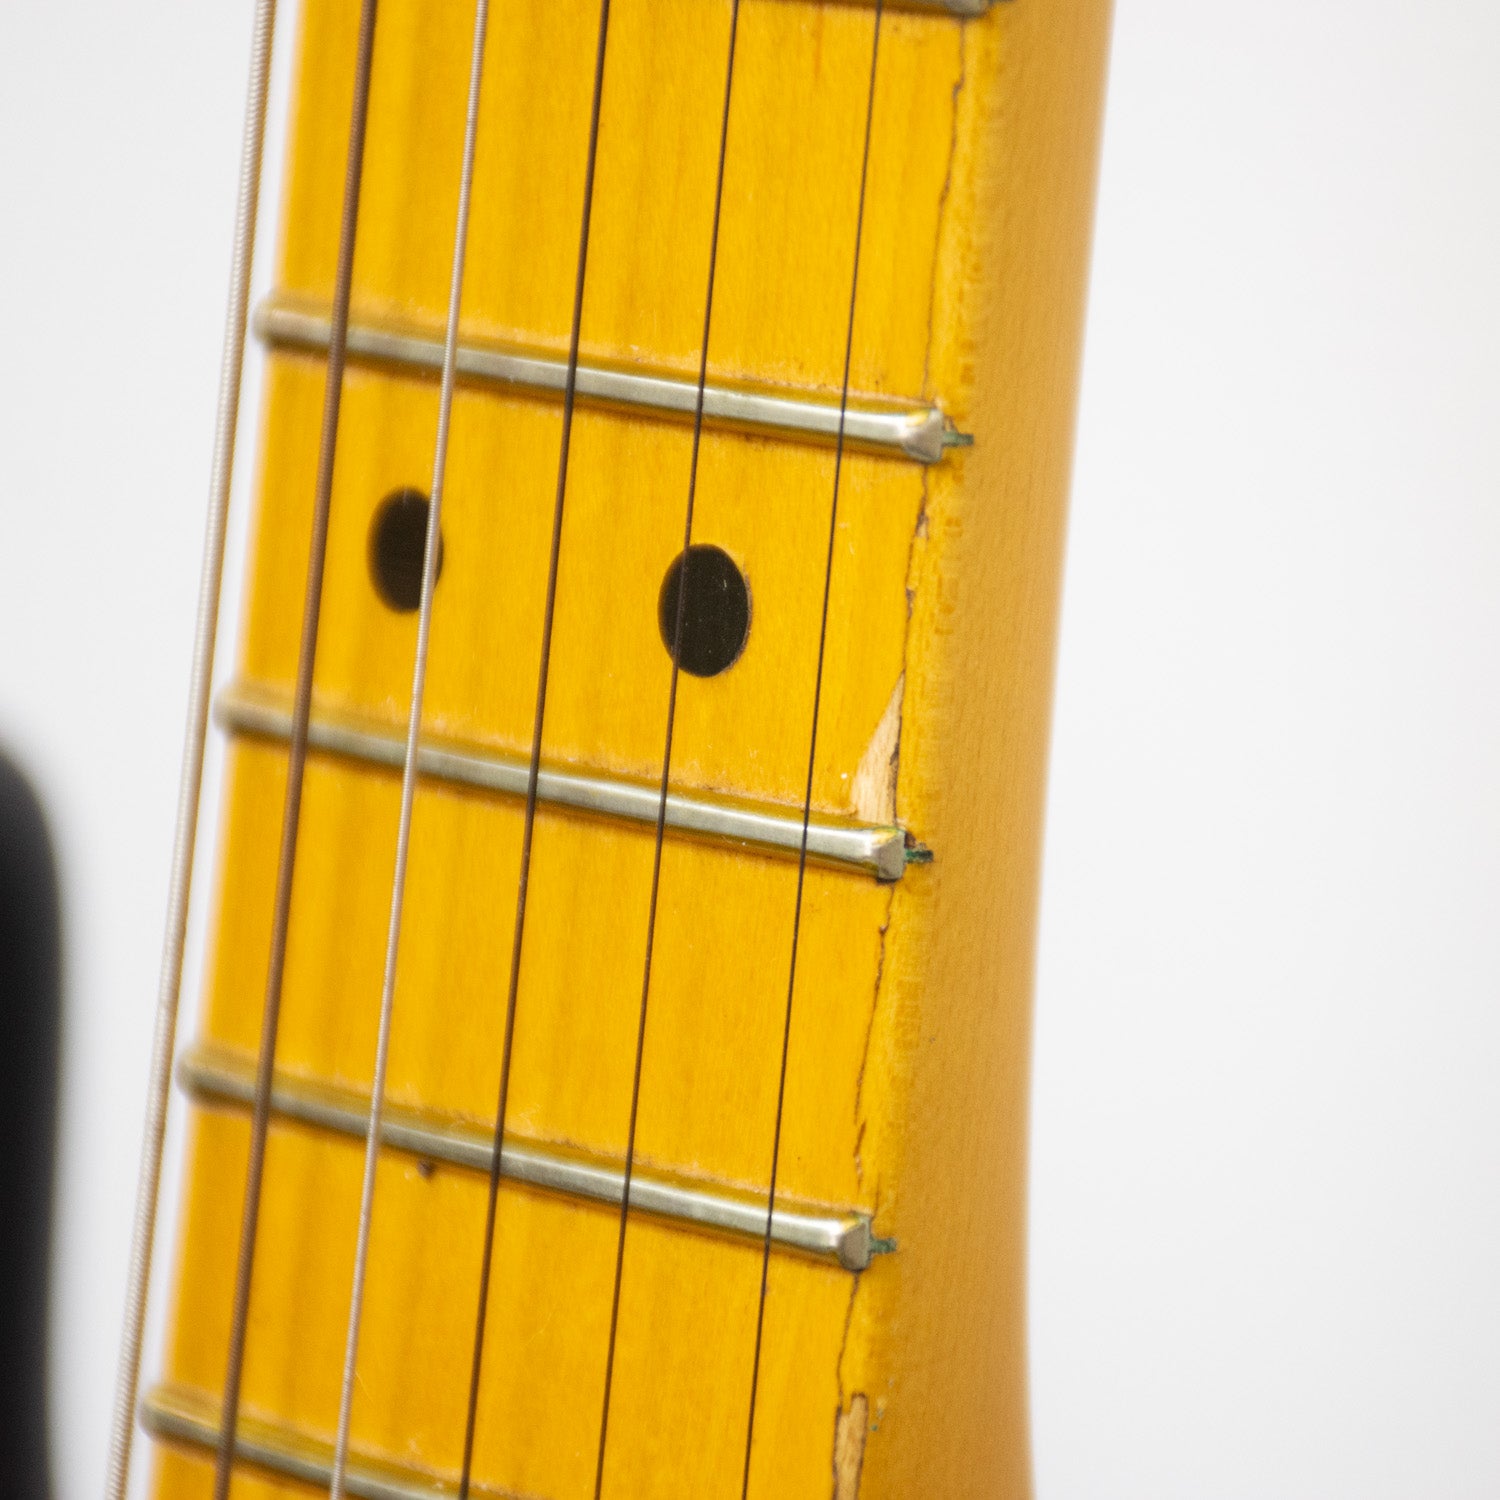 Fender American Professional II Stratocaster w/ Rosewood Fretboard - Sunburst